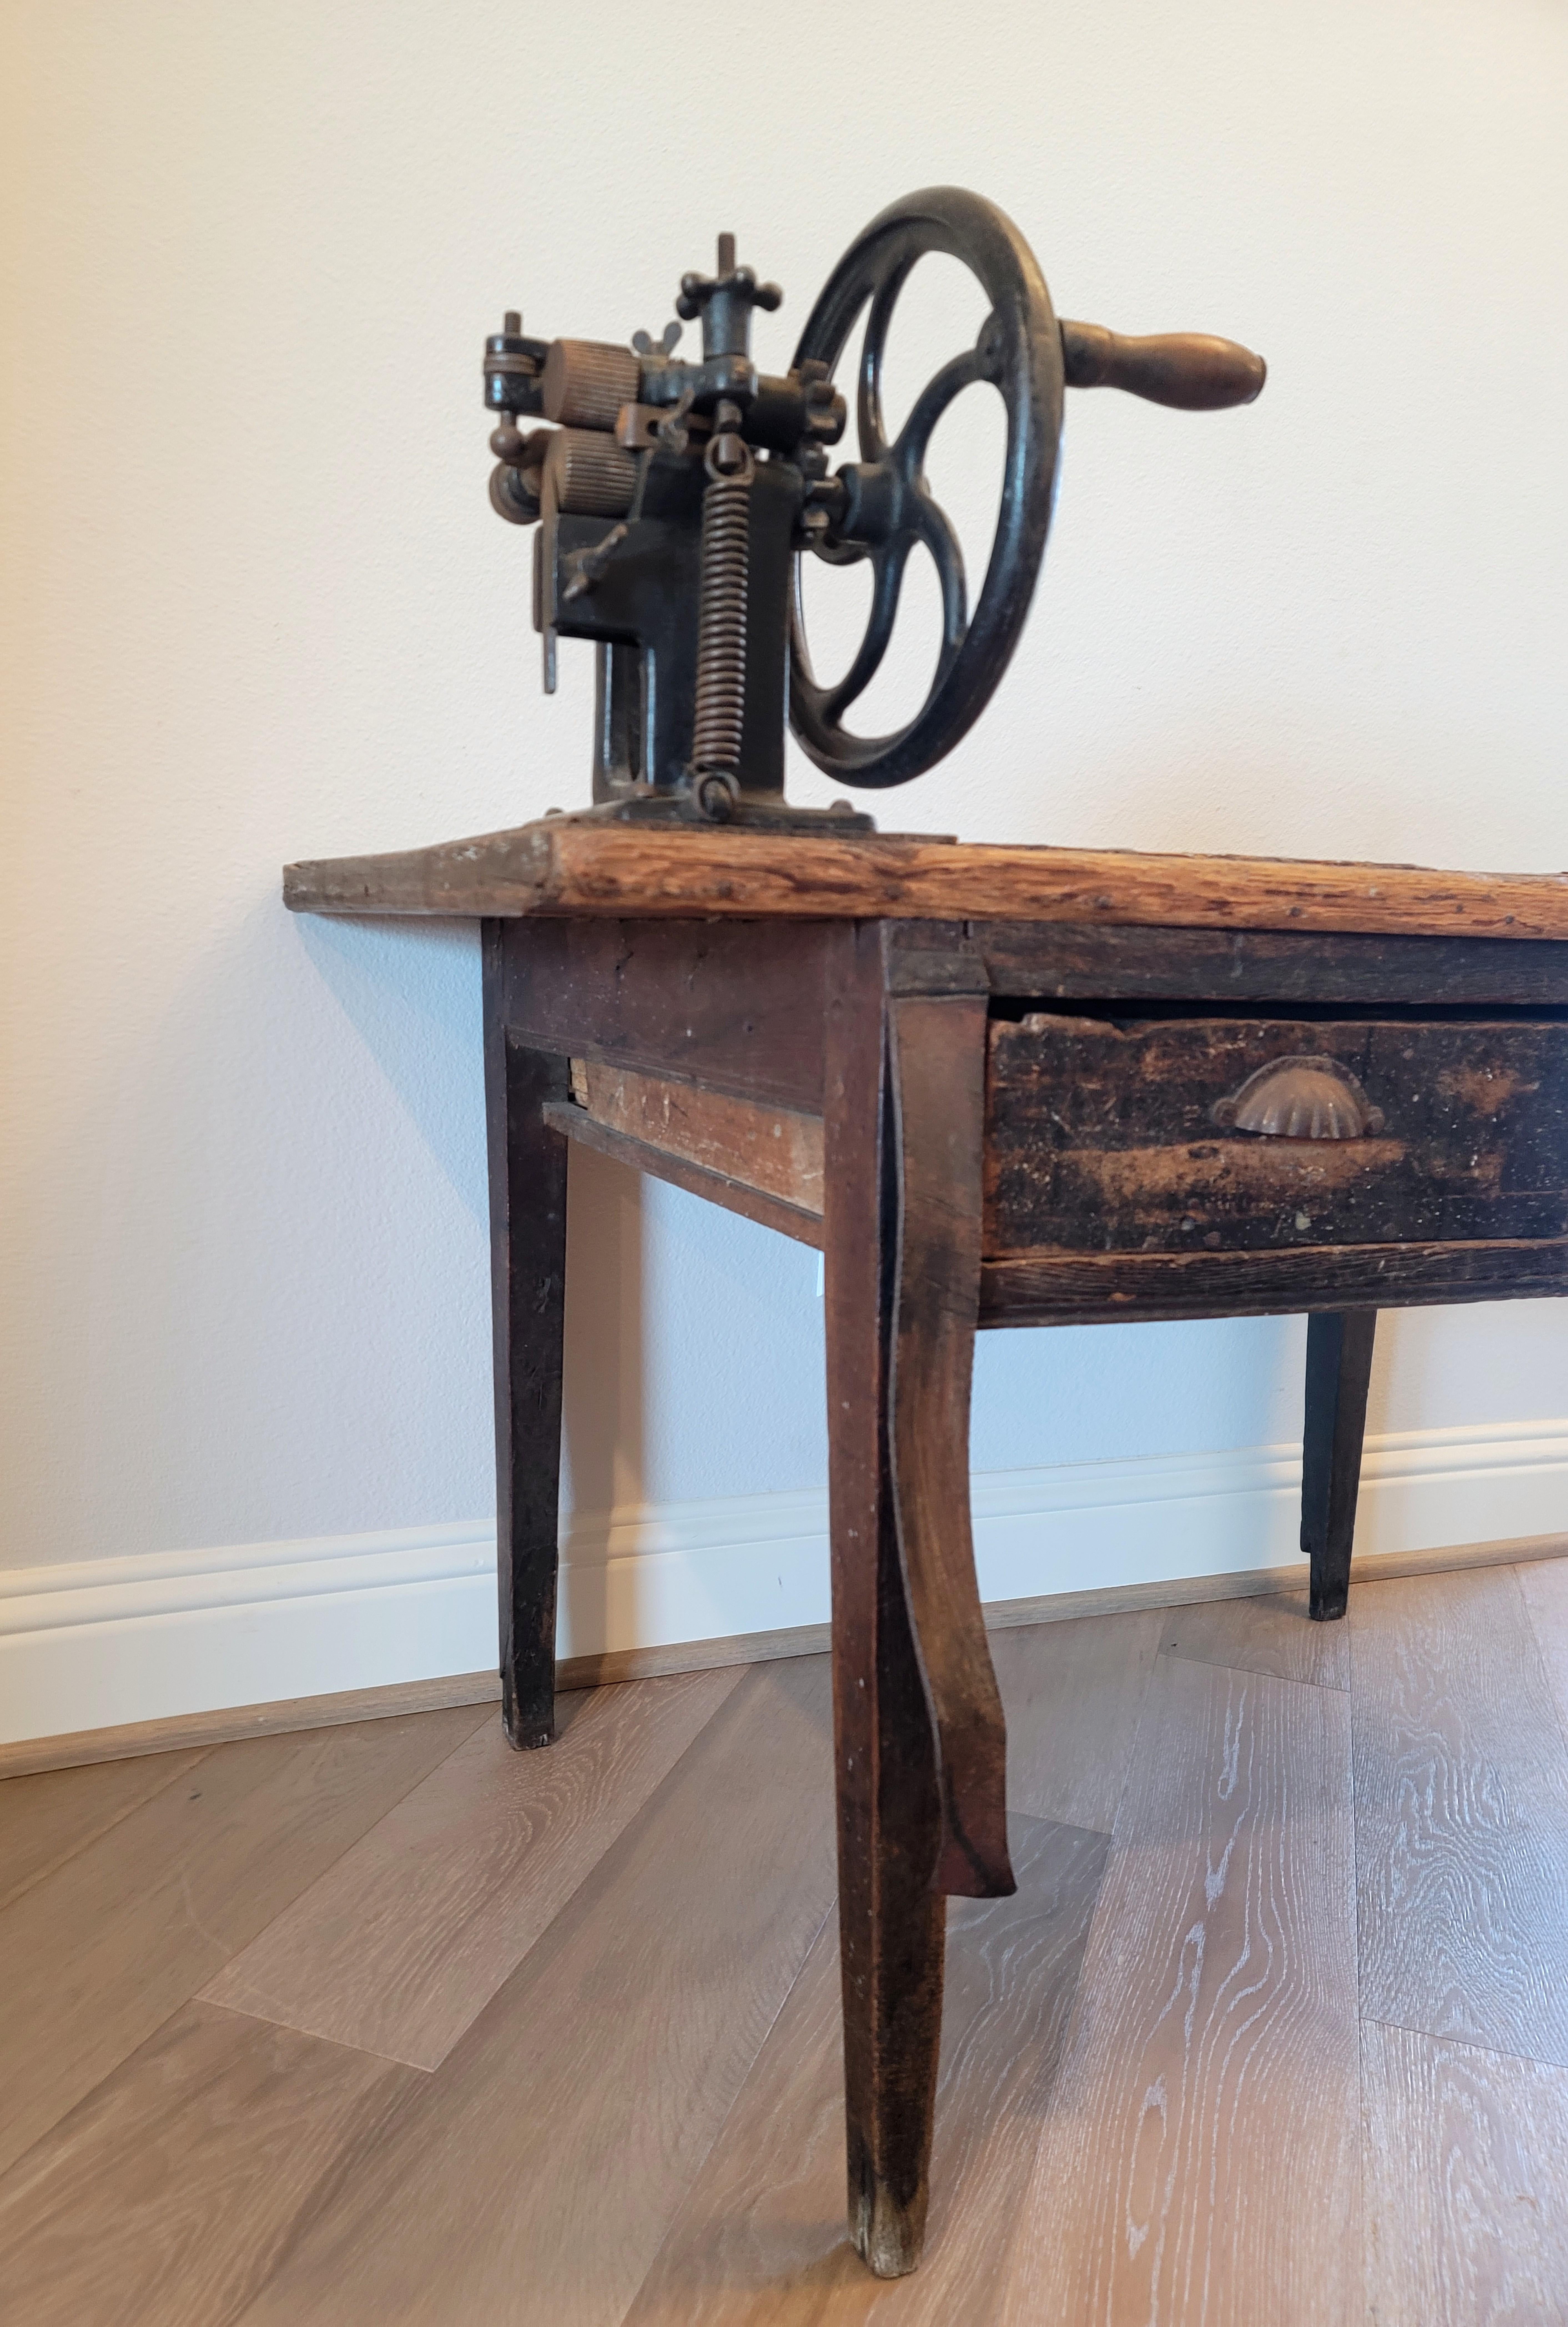 French Cobbler Leatherwork Shop Antique Industrial Craftsman Workbench Table 1